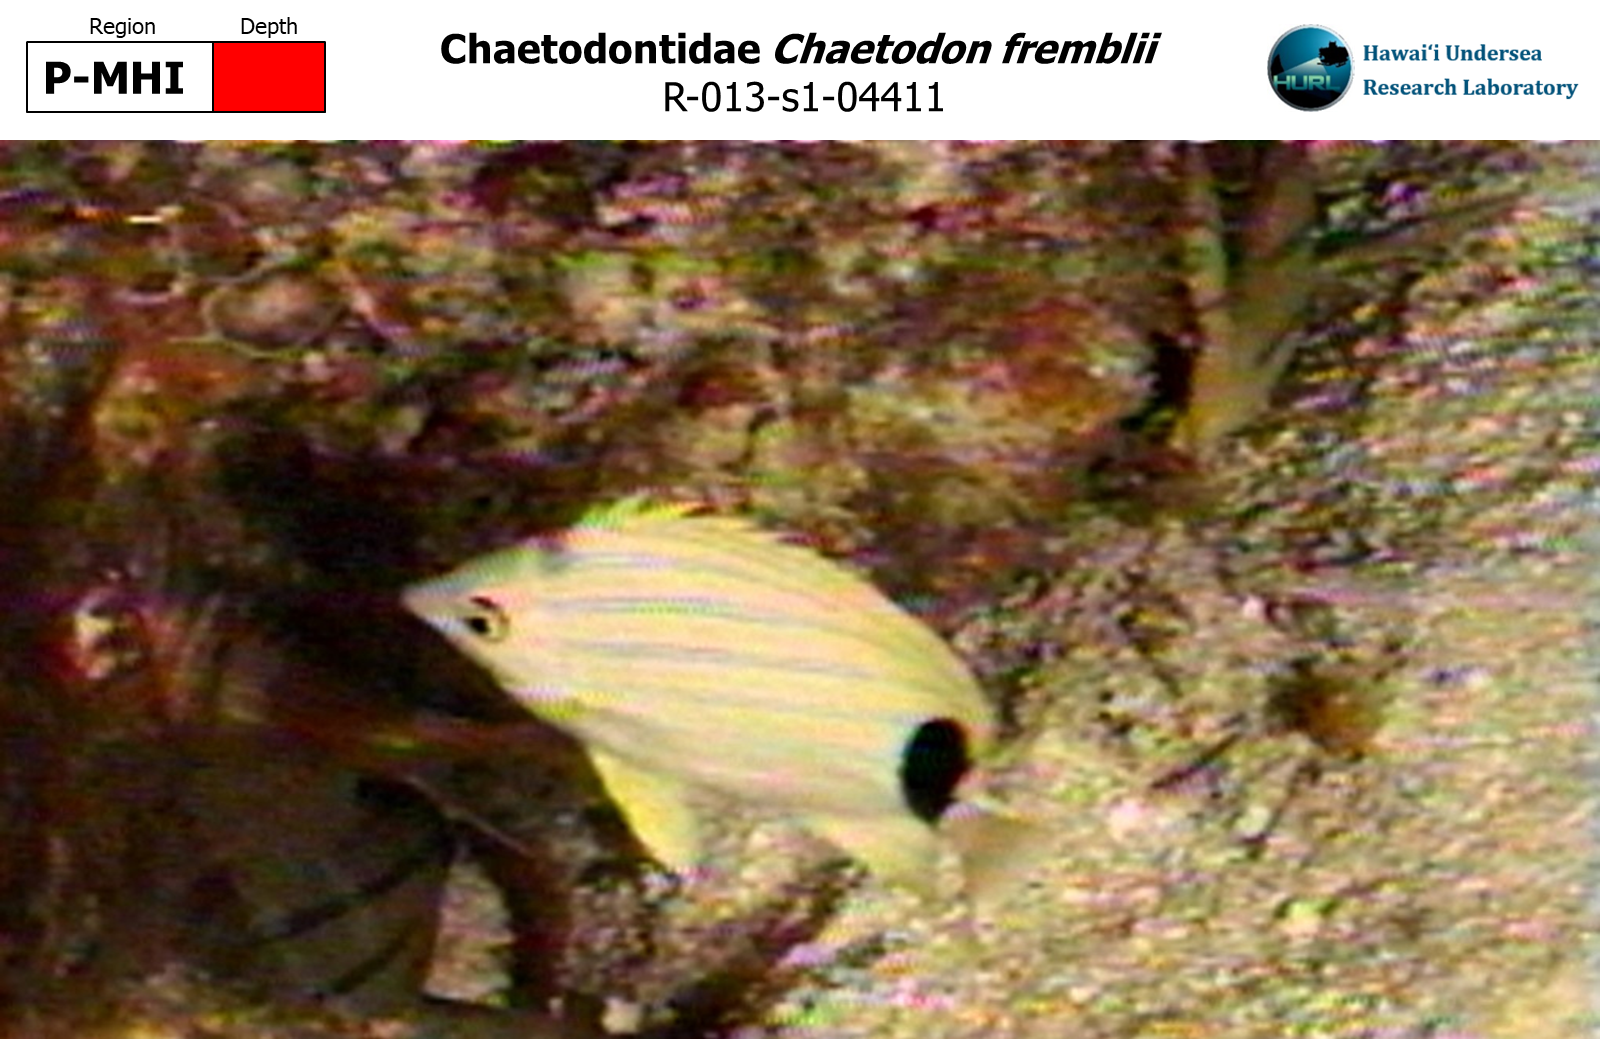 Chaetodon fremblii